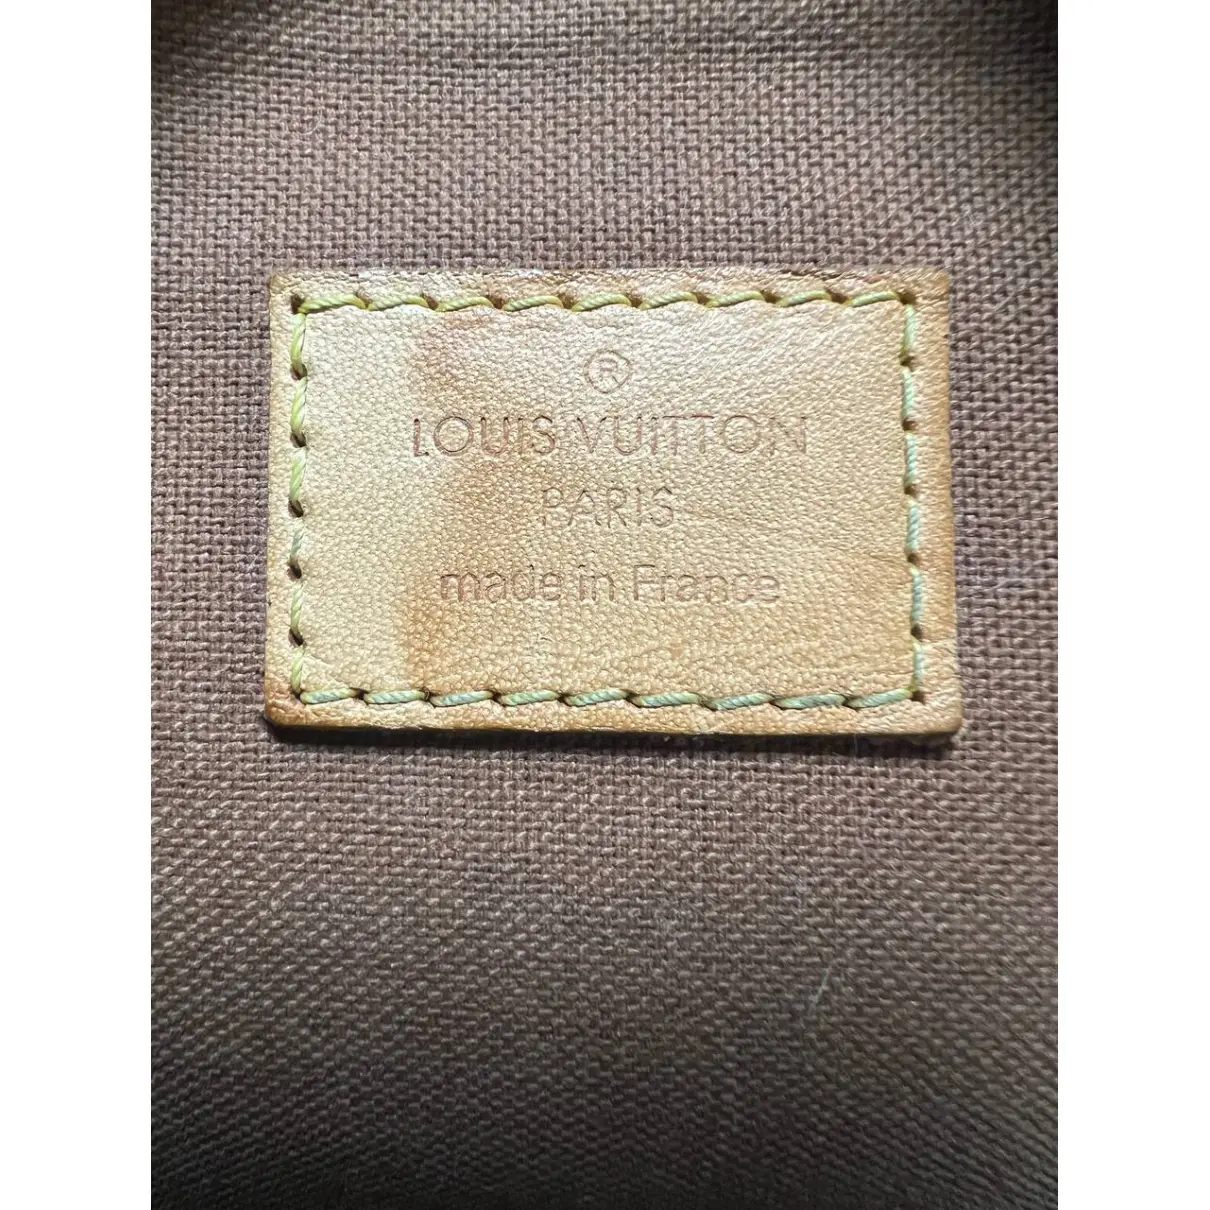 Buy Louis Vuitton Bosphore Backpack leather backpack online